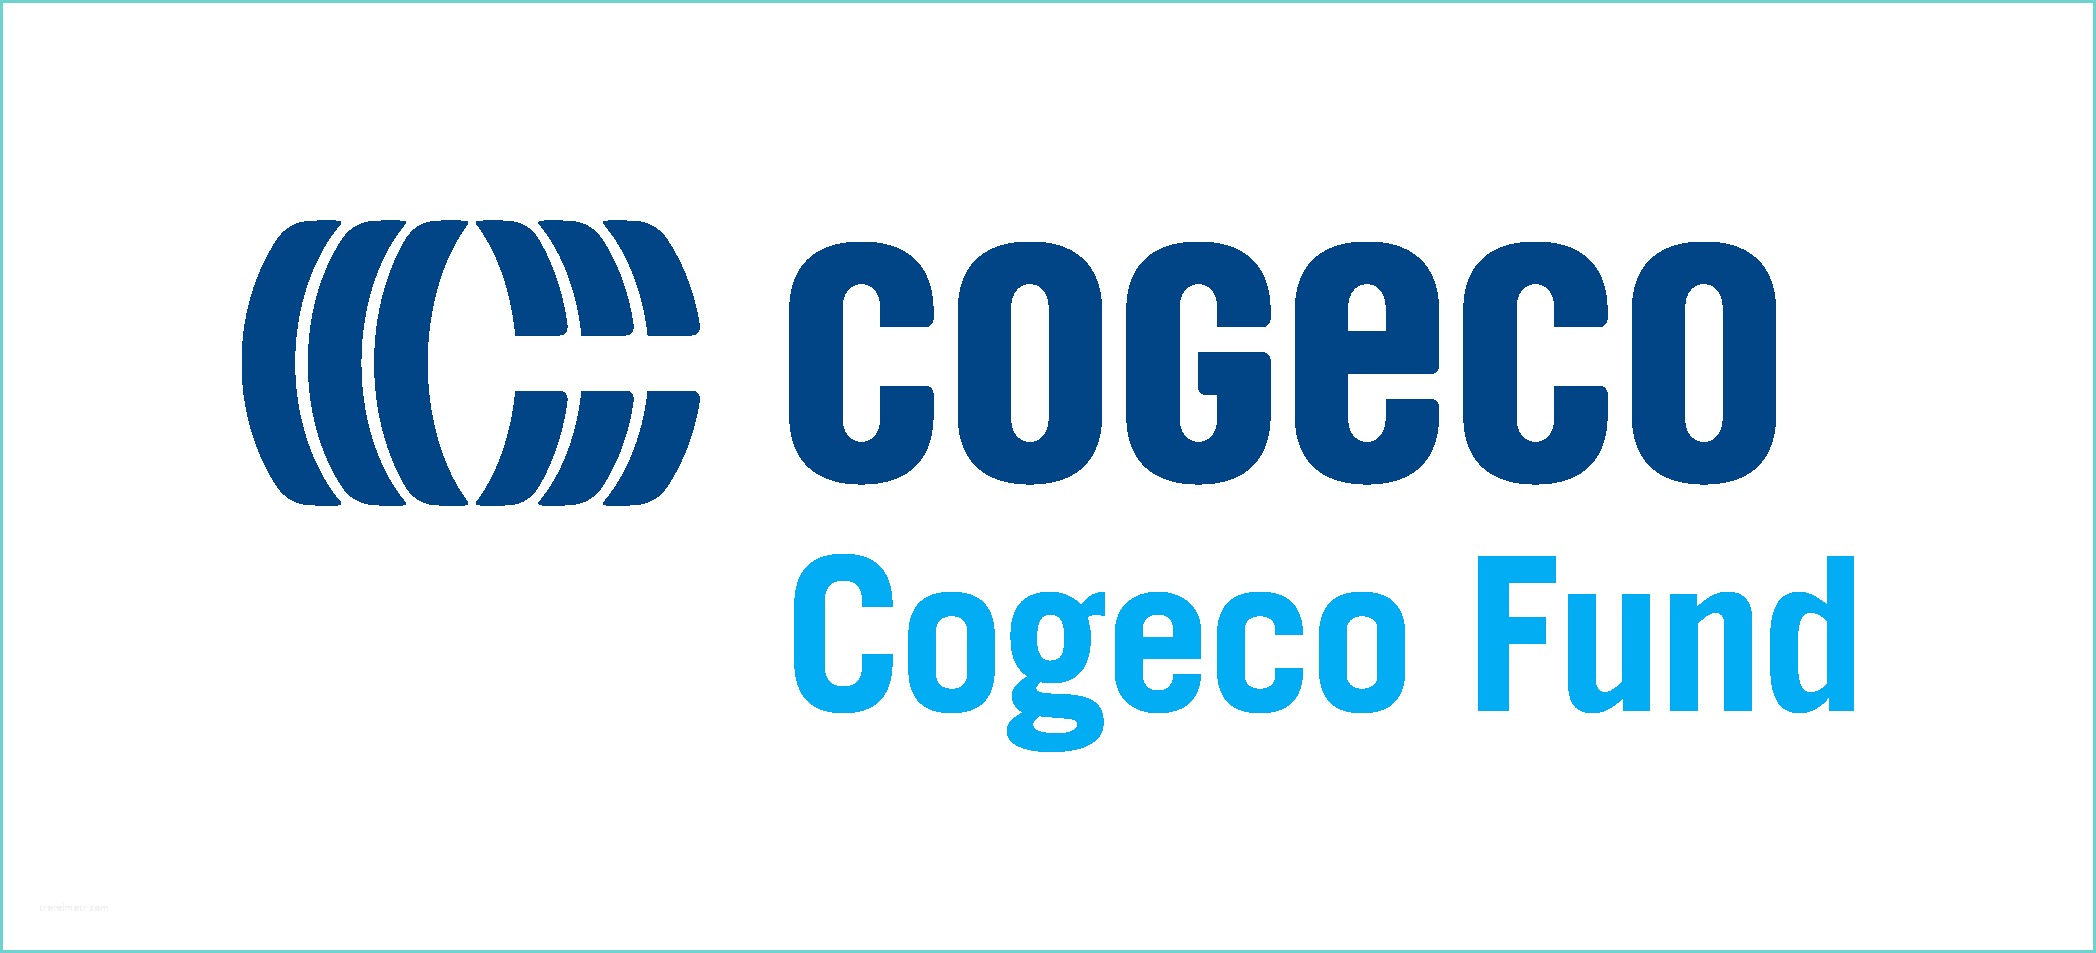 Webmail Cogeco Ca Cogeco Fund